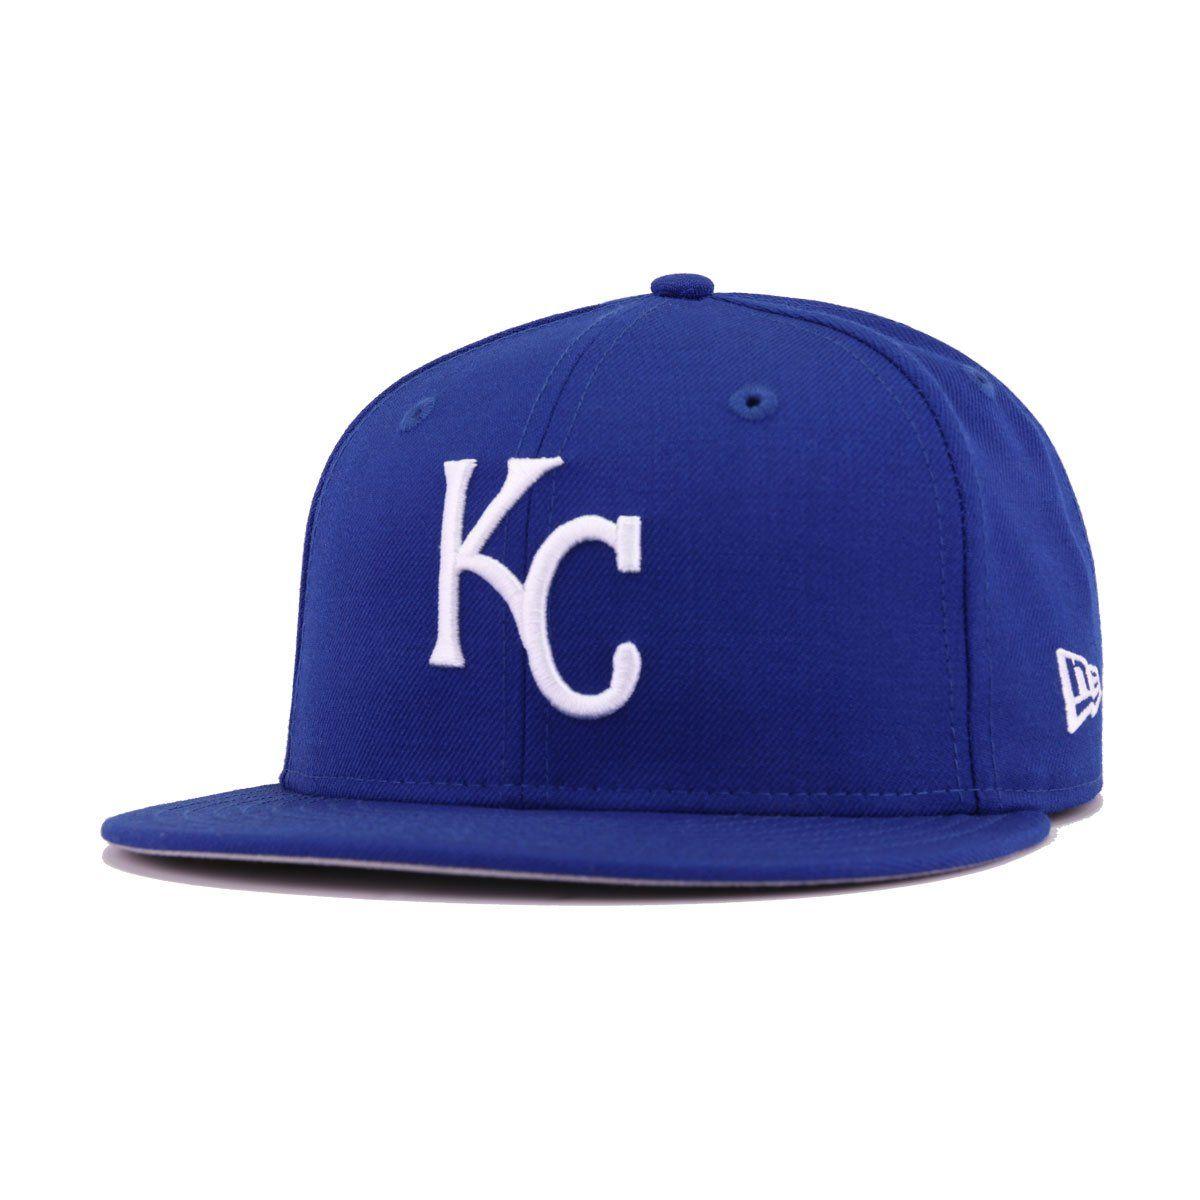 World of Light Blue Logo - Kansas City Royals Light Royal Blue 2015 World Series New Era 59Fifty